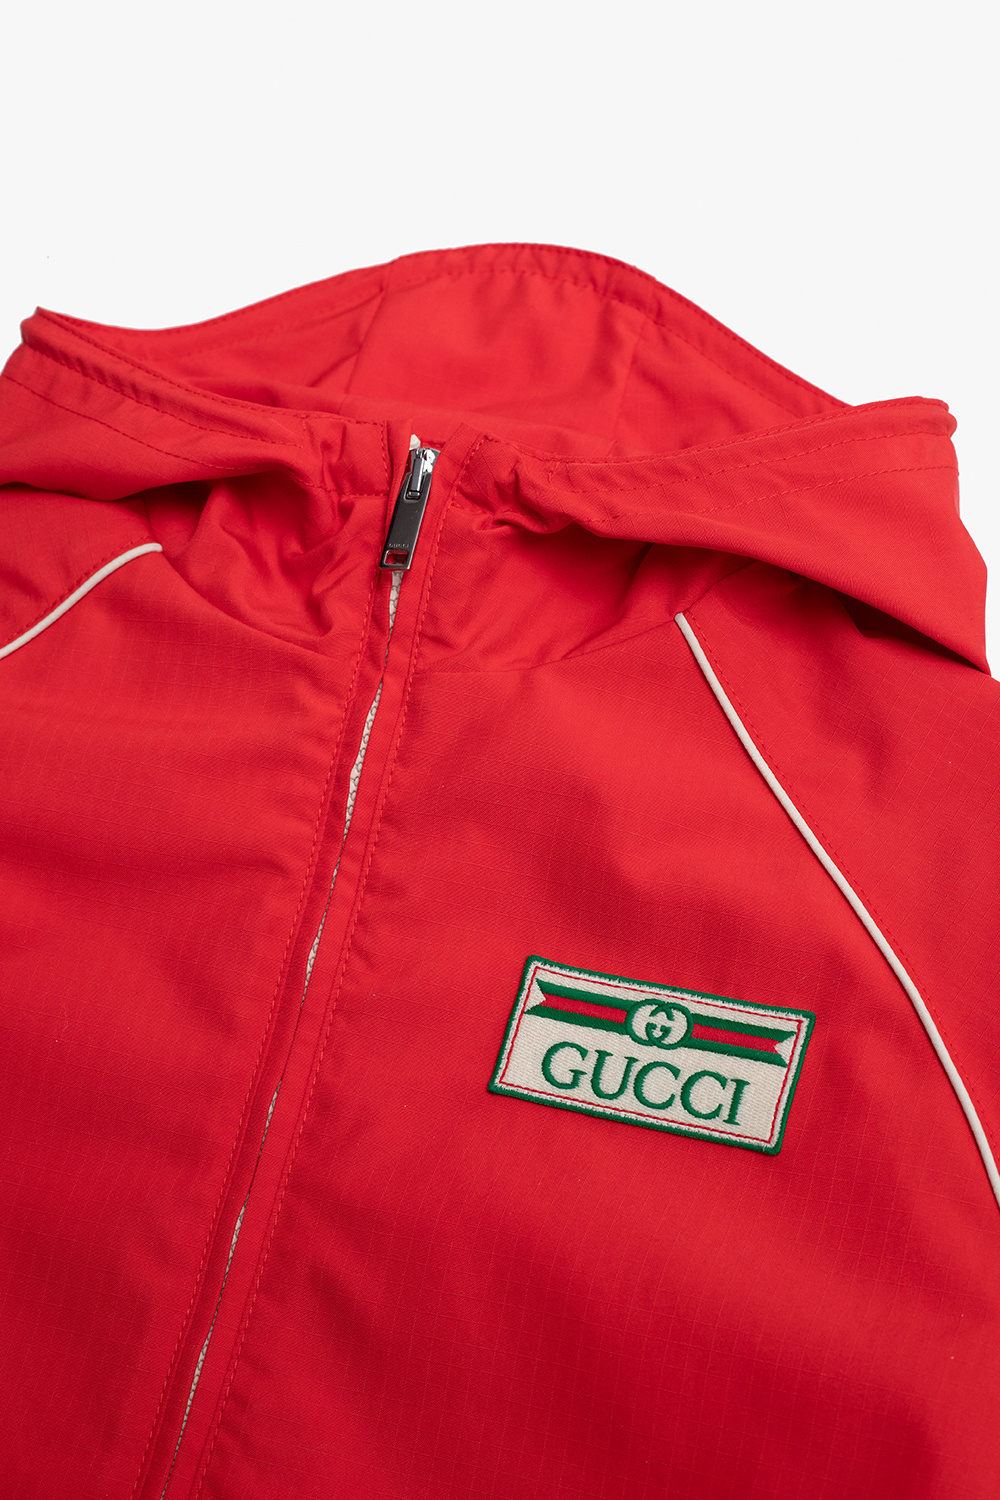 Designer logo patches Gucci Louis Vuitton Kenzo